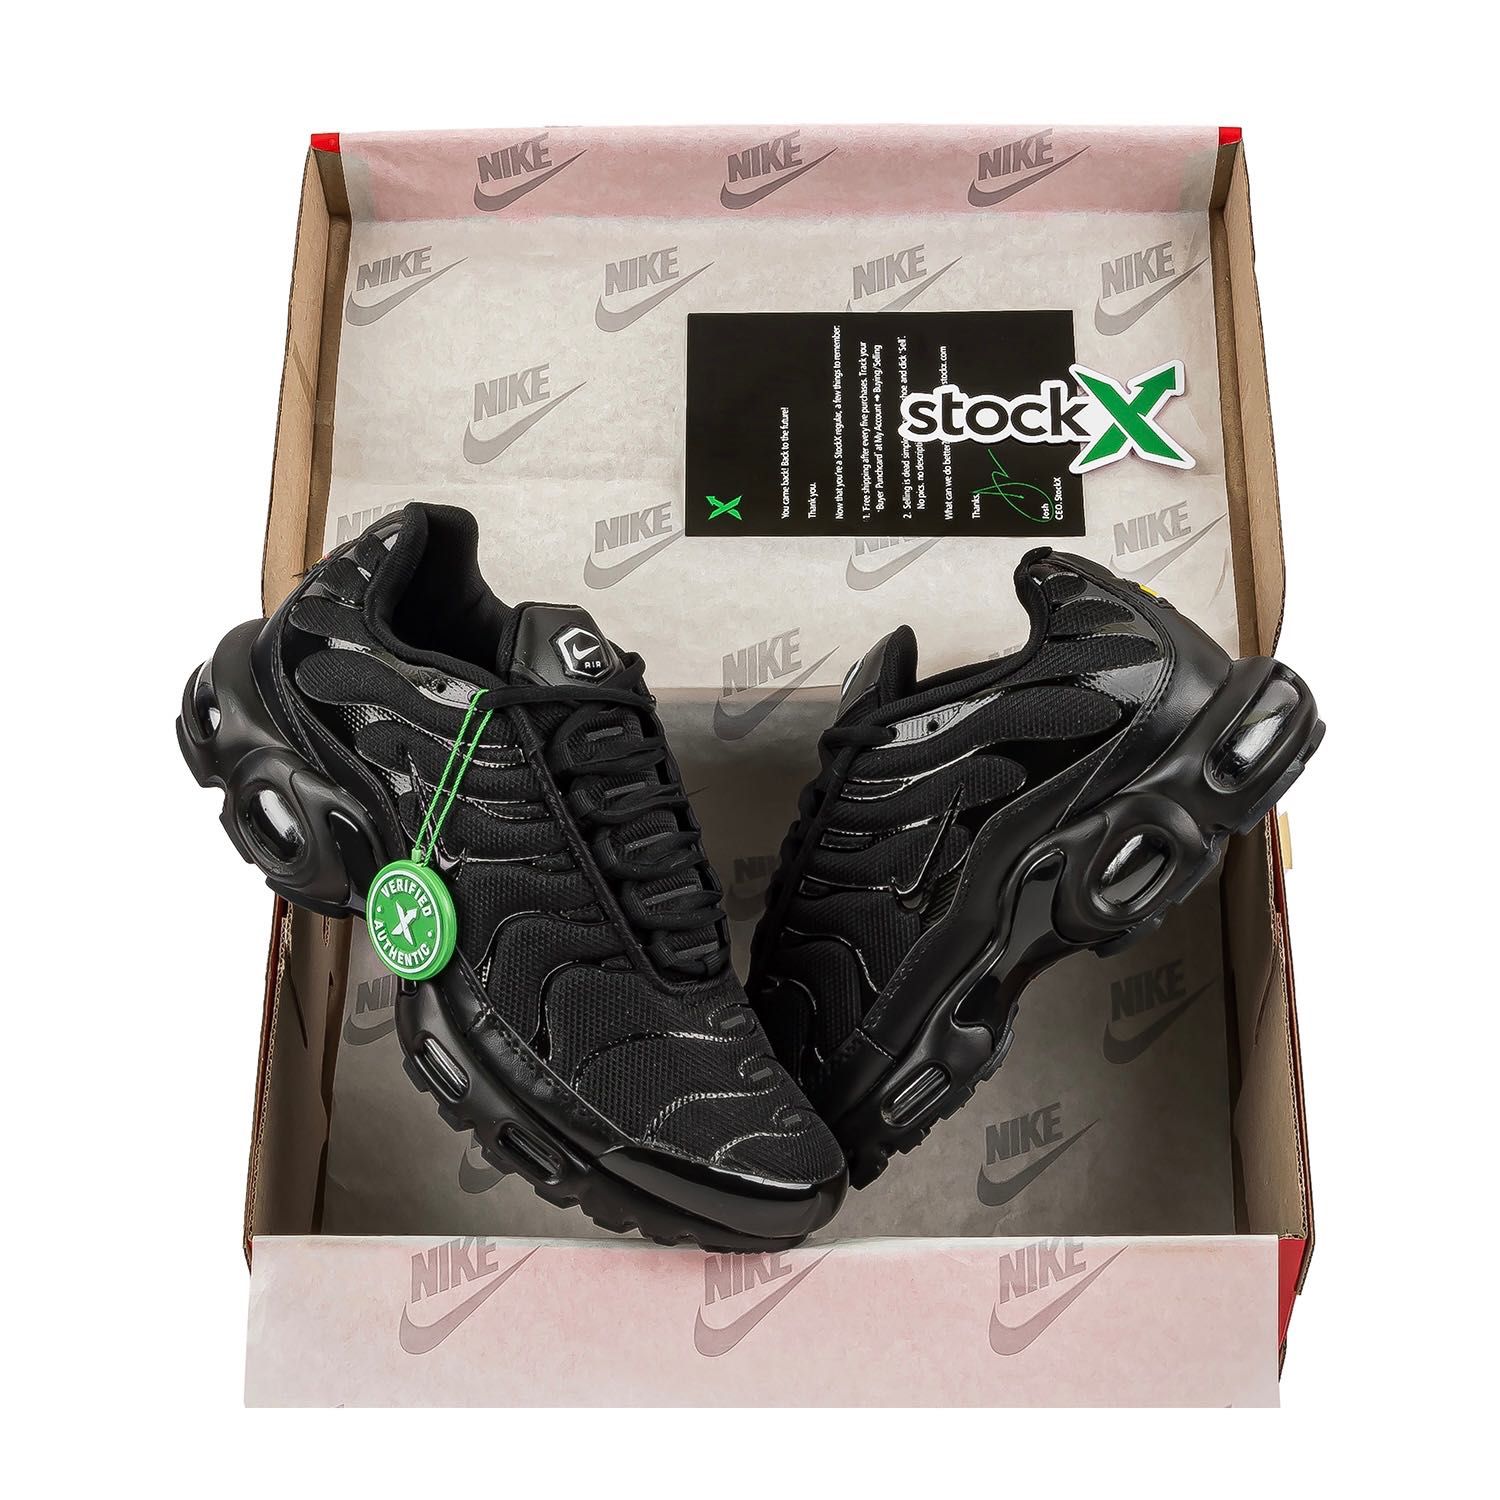 Мужские кроссовки Nike Air Max TN Plus All Black. Размеры 41-45